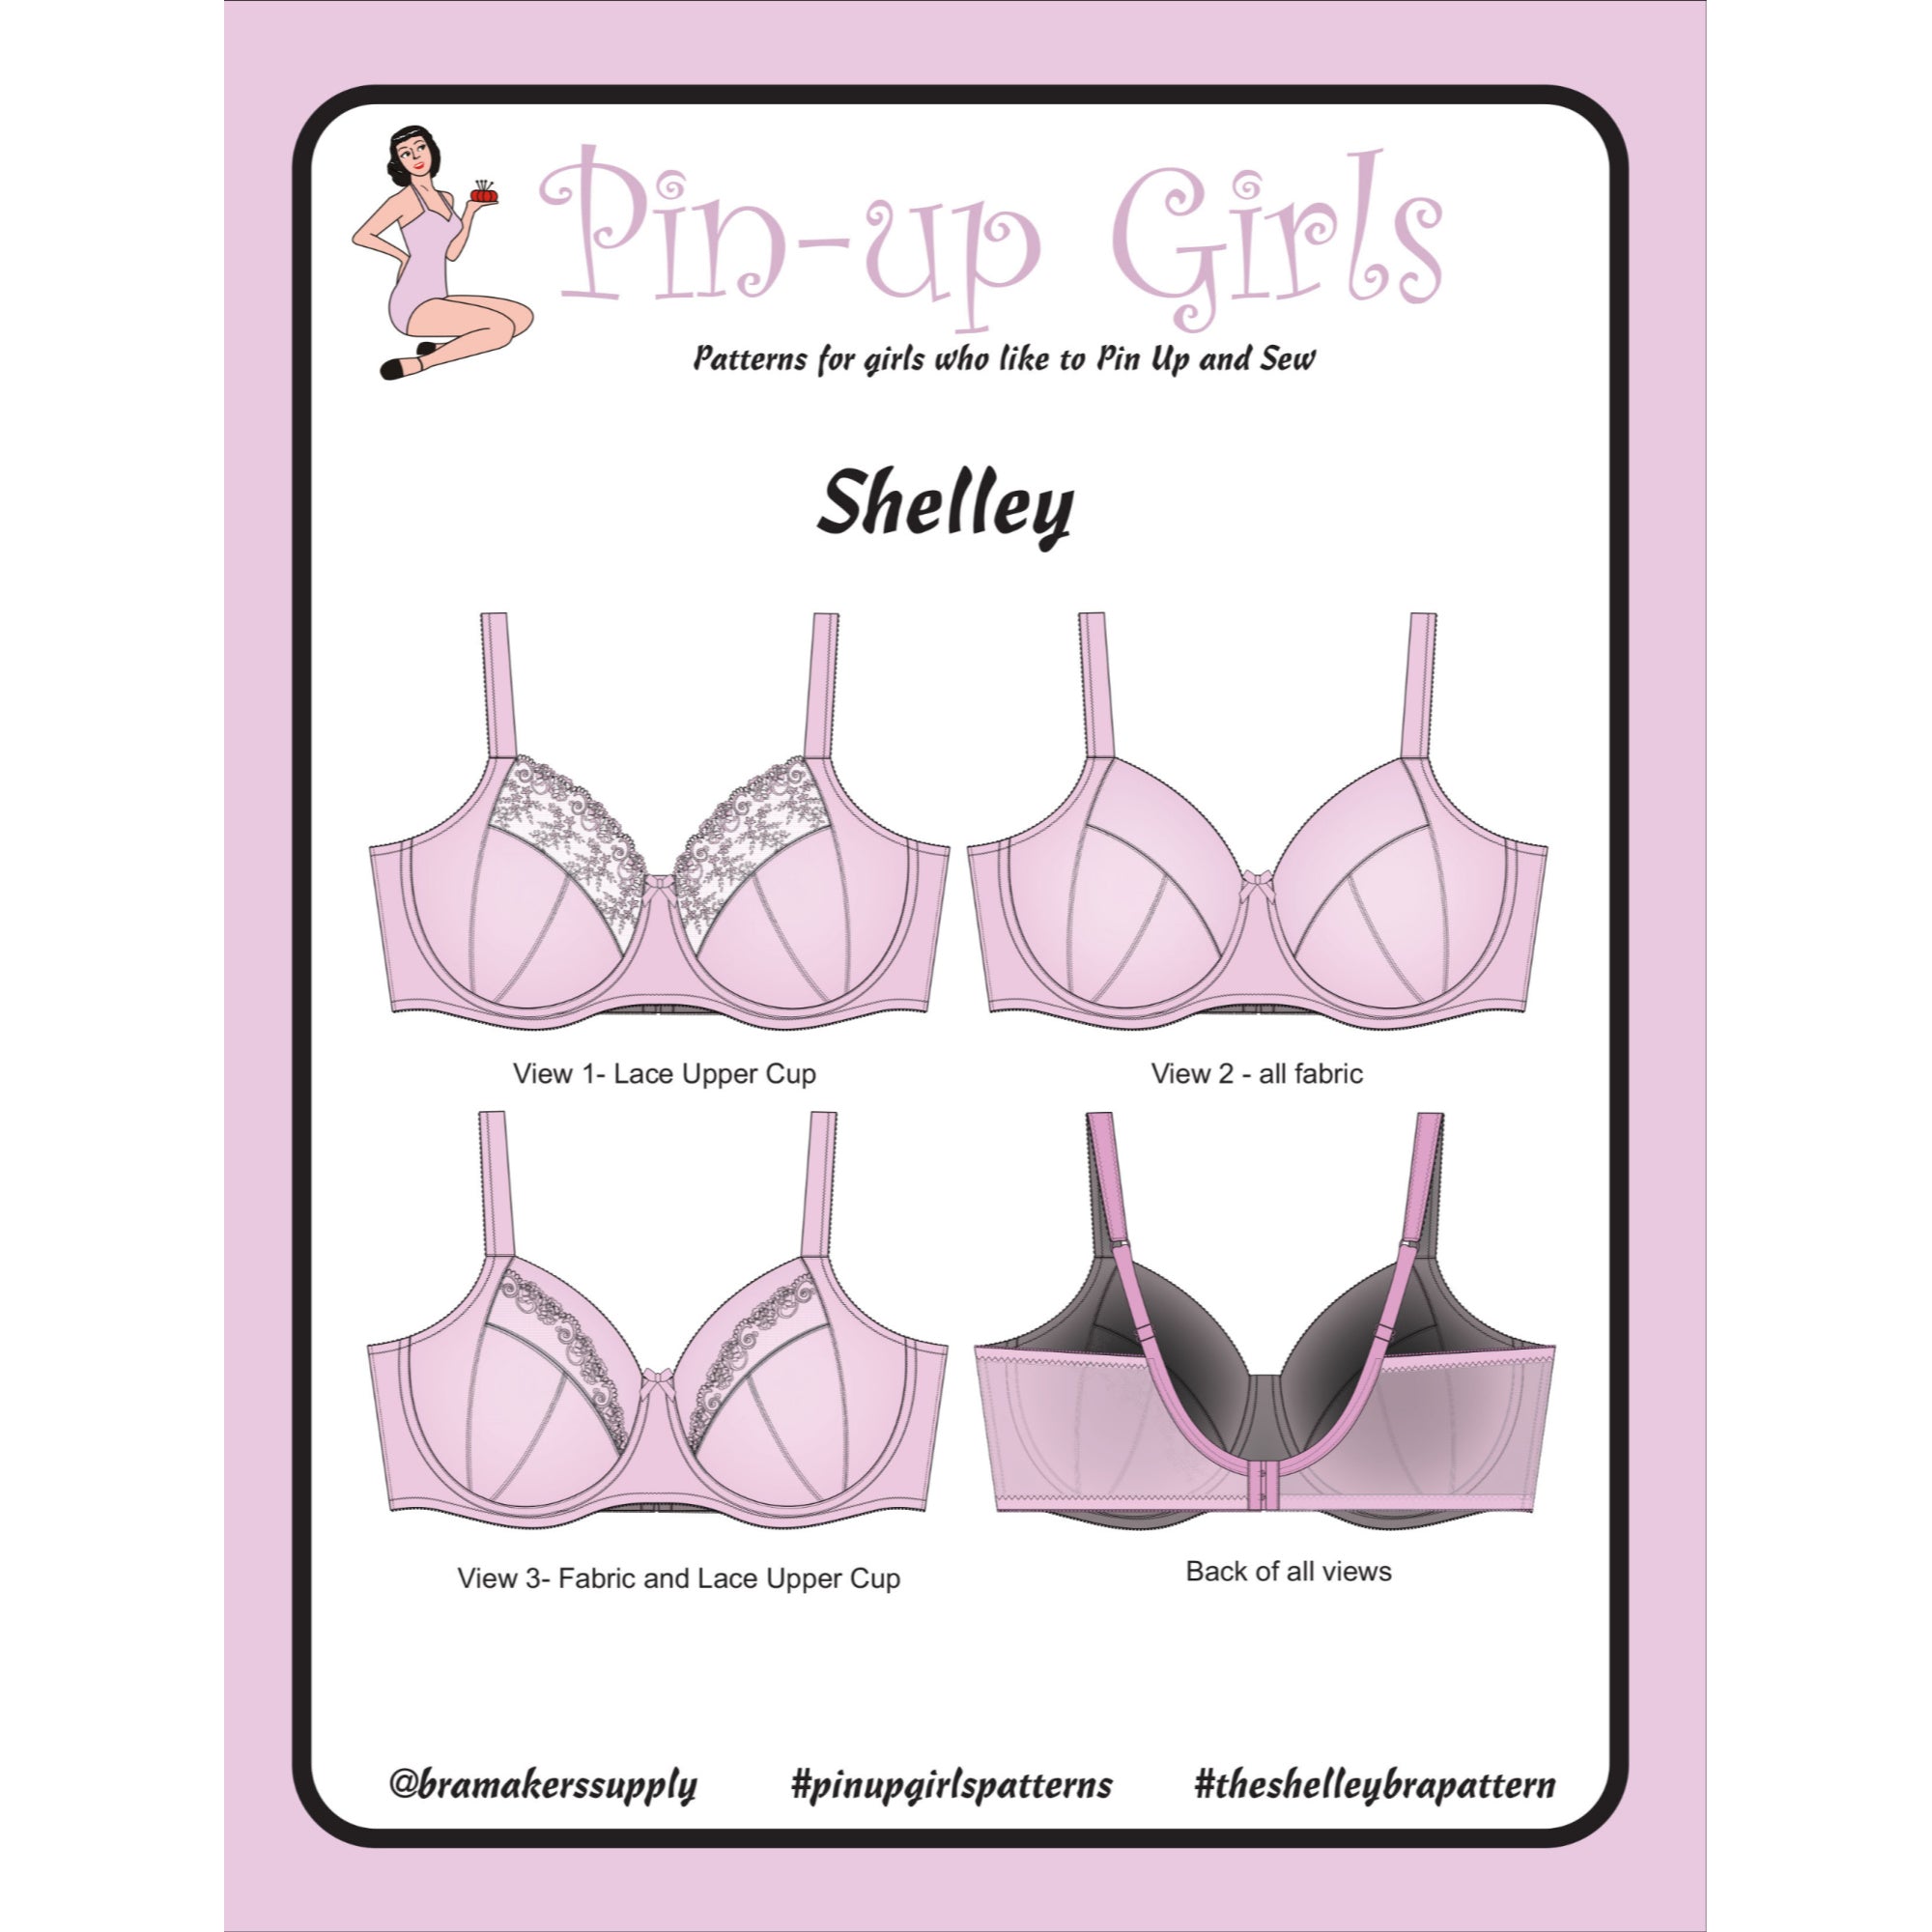 Pin-Up Girls: Shelley Full Band Bra Pattern from